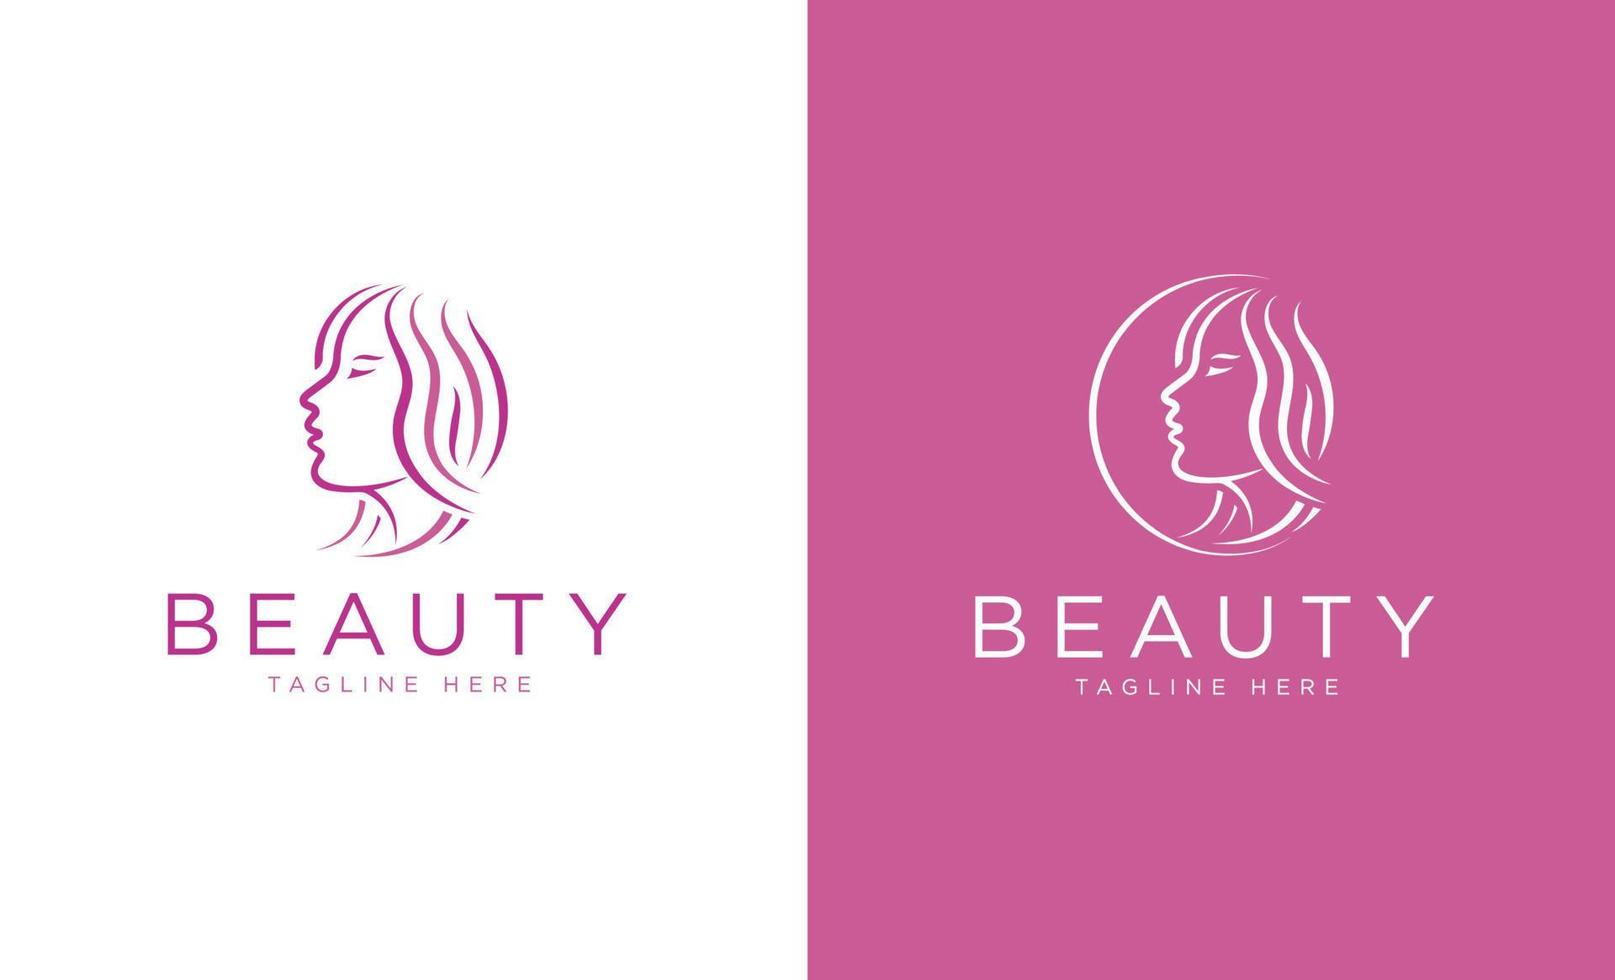 Beauty woman face logo with hair icon design template vector